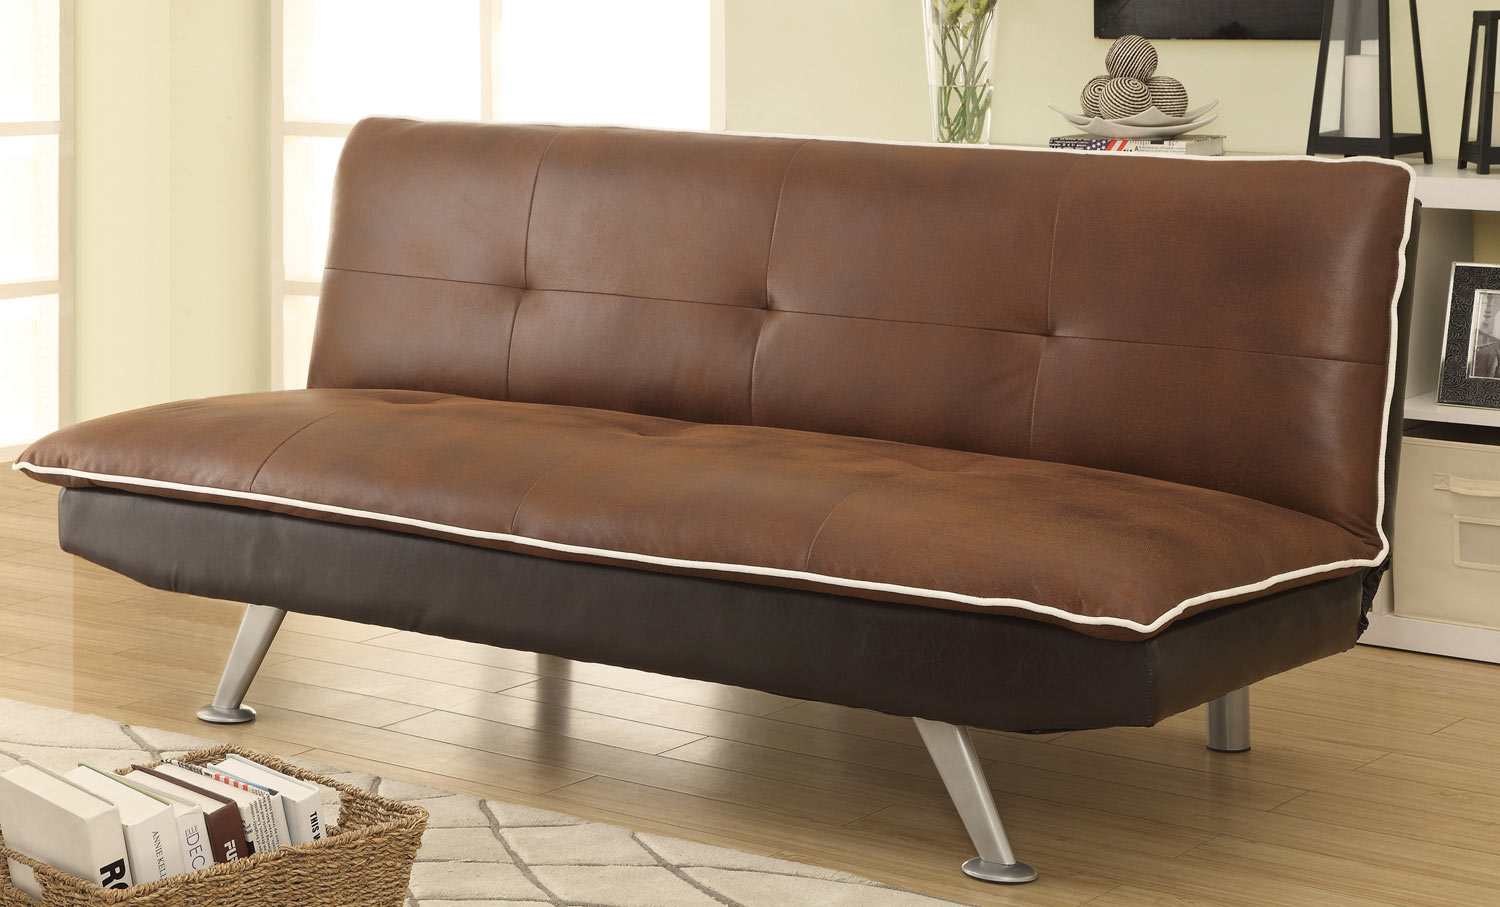 Coaster 500752 Sofa Bed - Brown/Chocolate